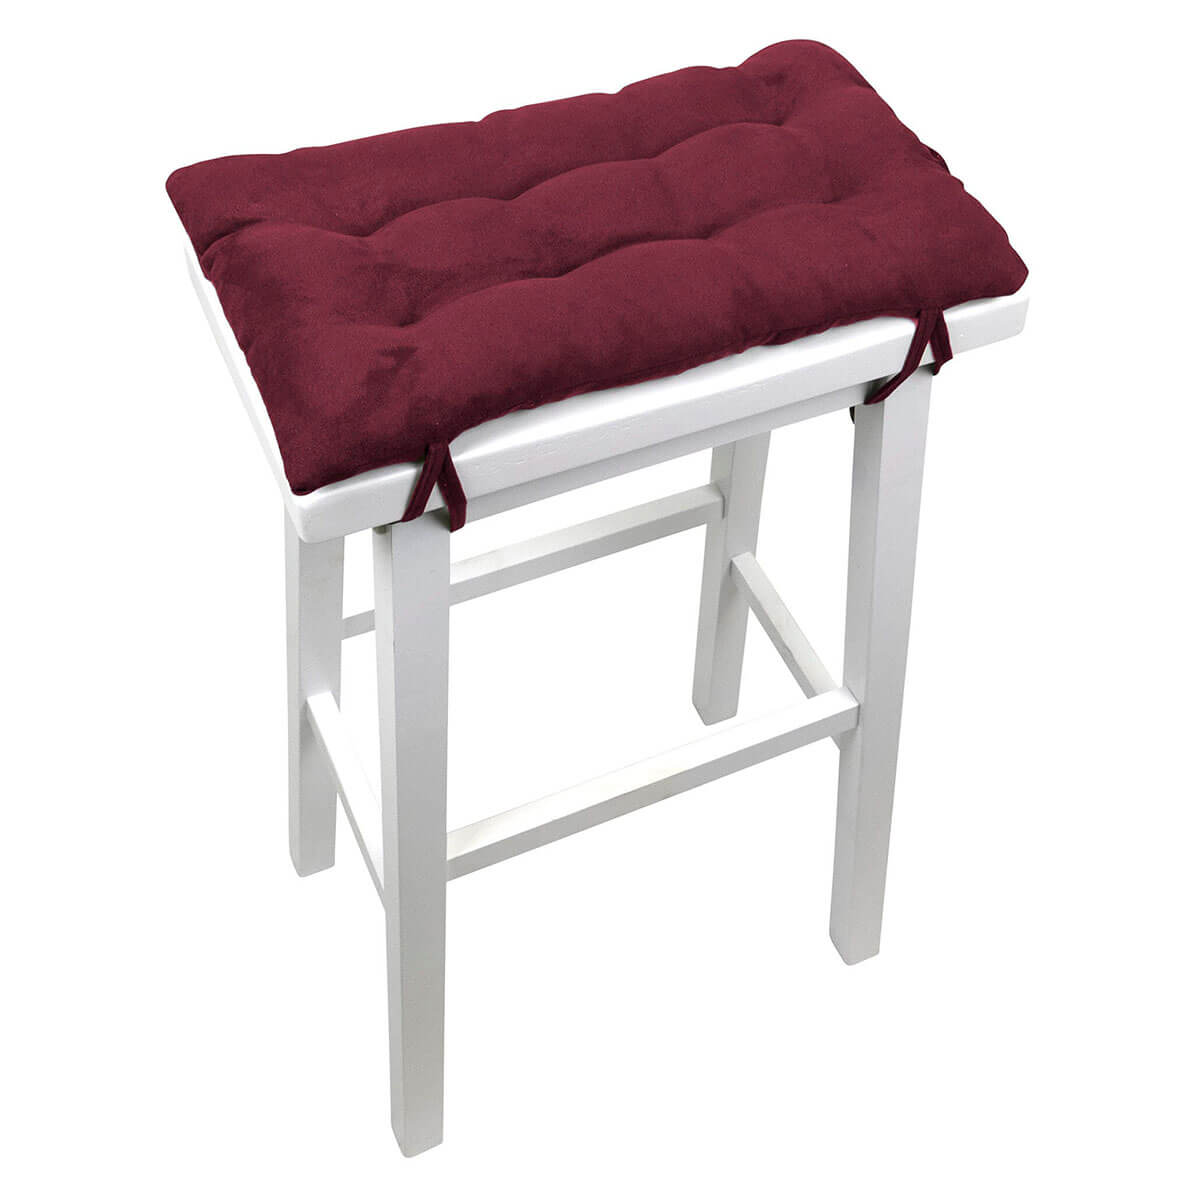 Micro-Suede Claret Red Saddle Stool Cushions - Barnett Home Decor - Gaucho Stool - Satori Cushions - Wine Red